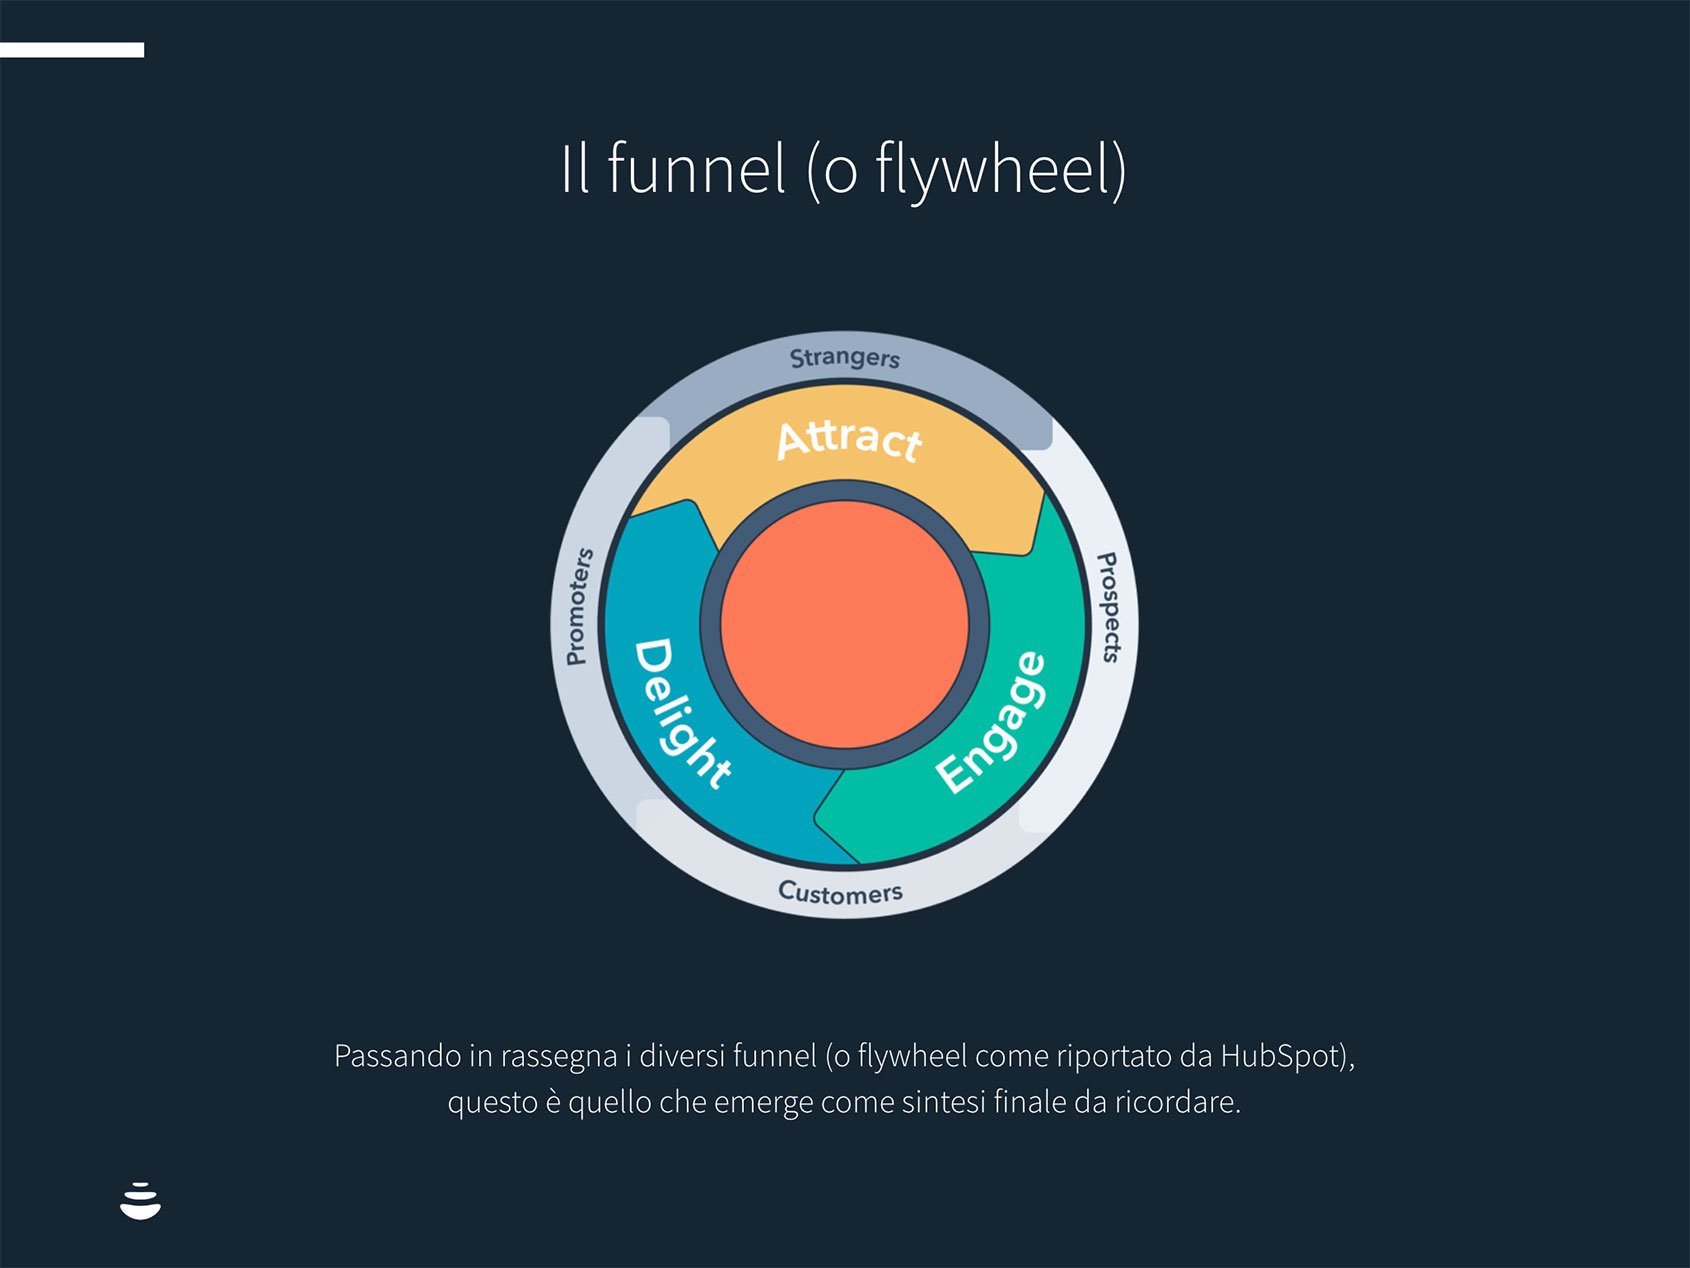 Il funnel (o flywheel) nel growth hacking